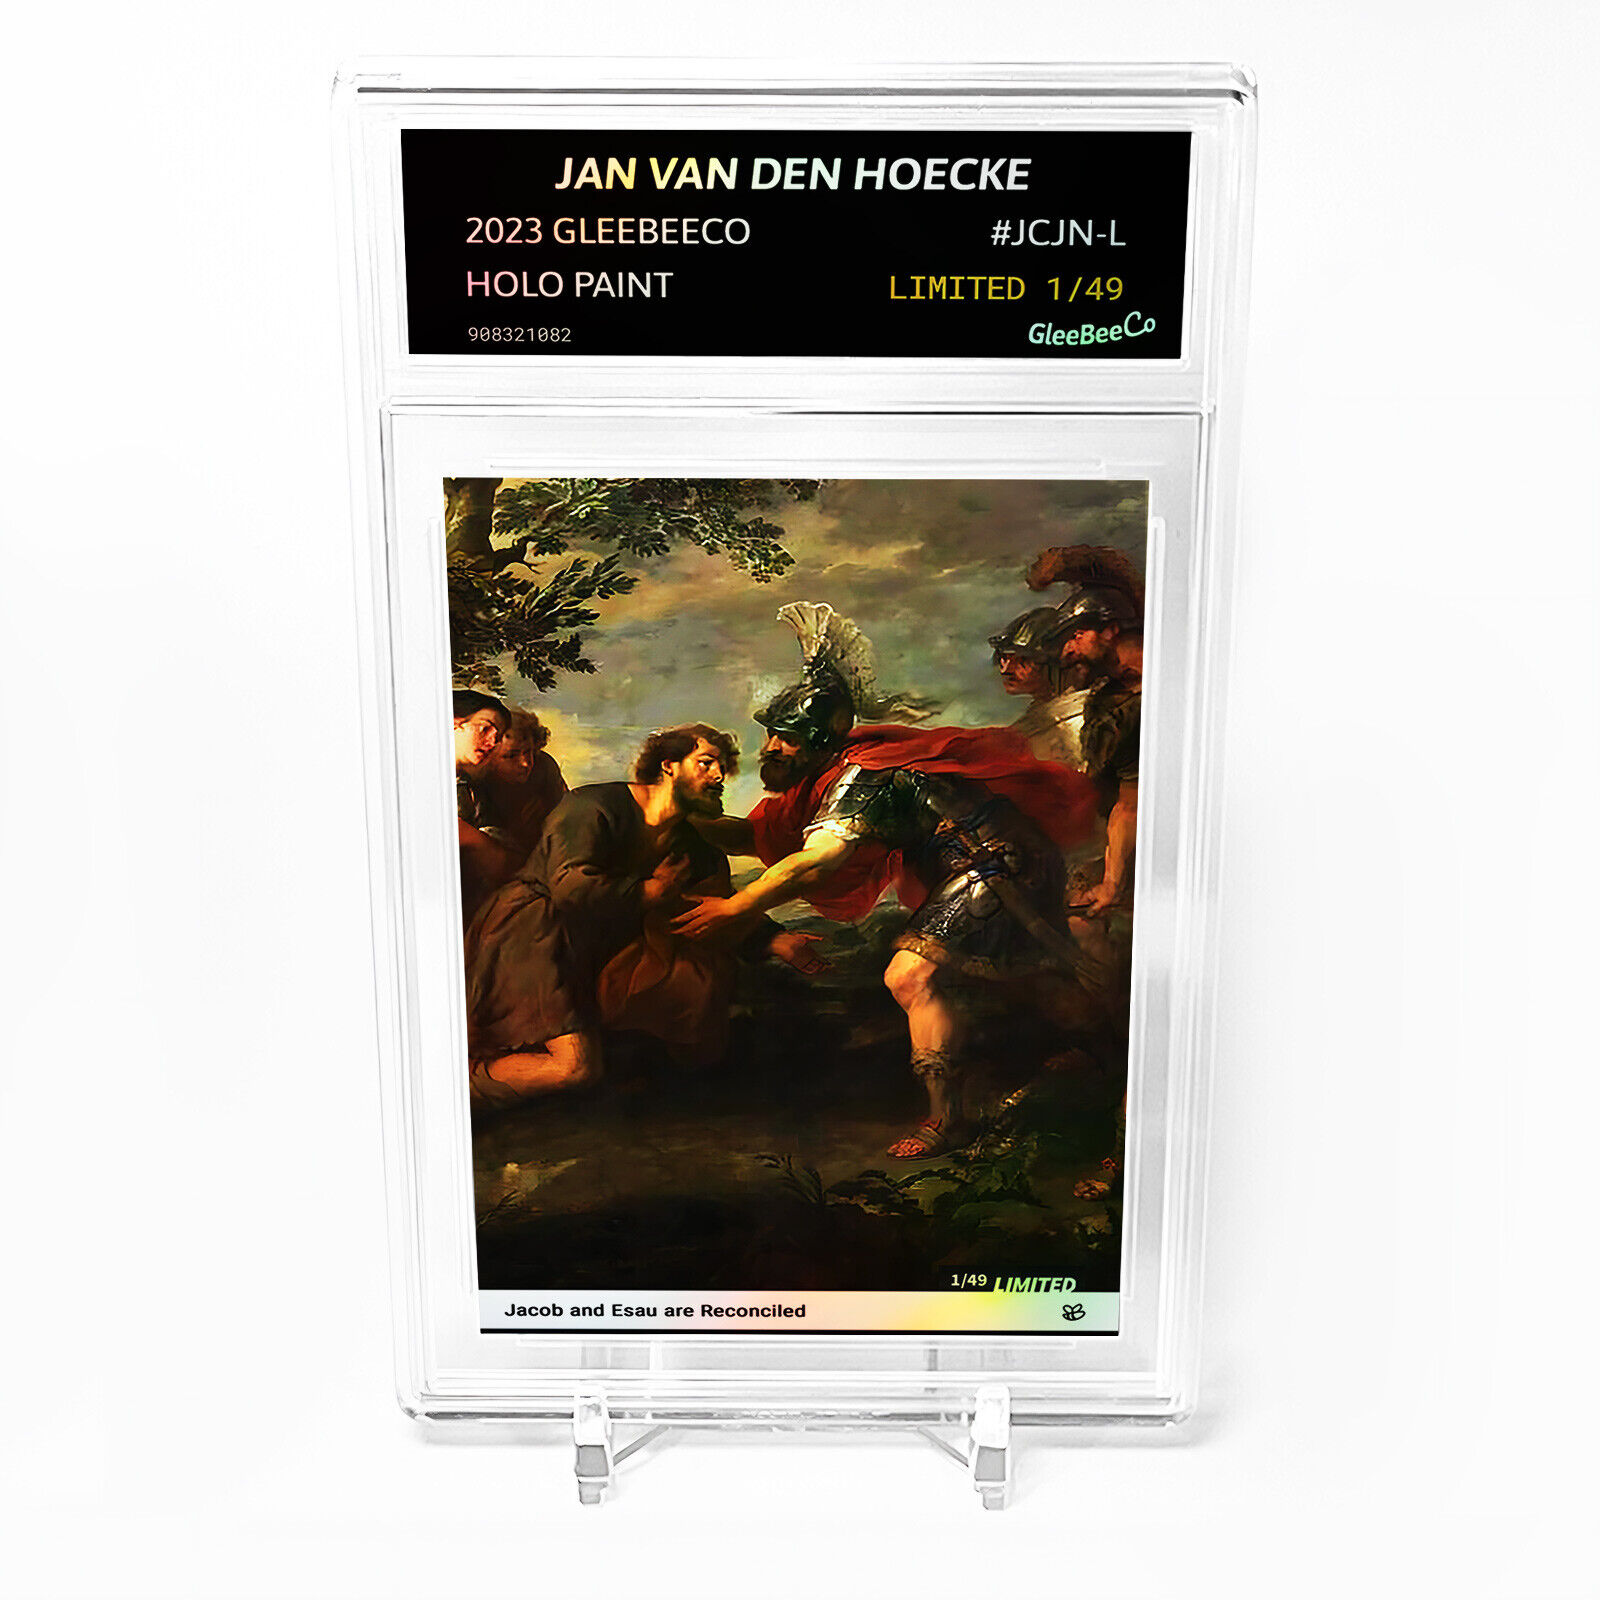 JACOB AND ESAU ARE RECONCILED Jan van den Hoecke 2023 GleeBeeCo Card #JCJN-L /49